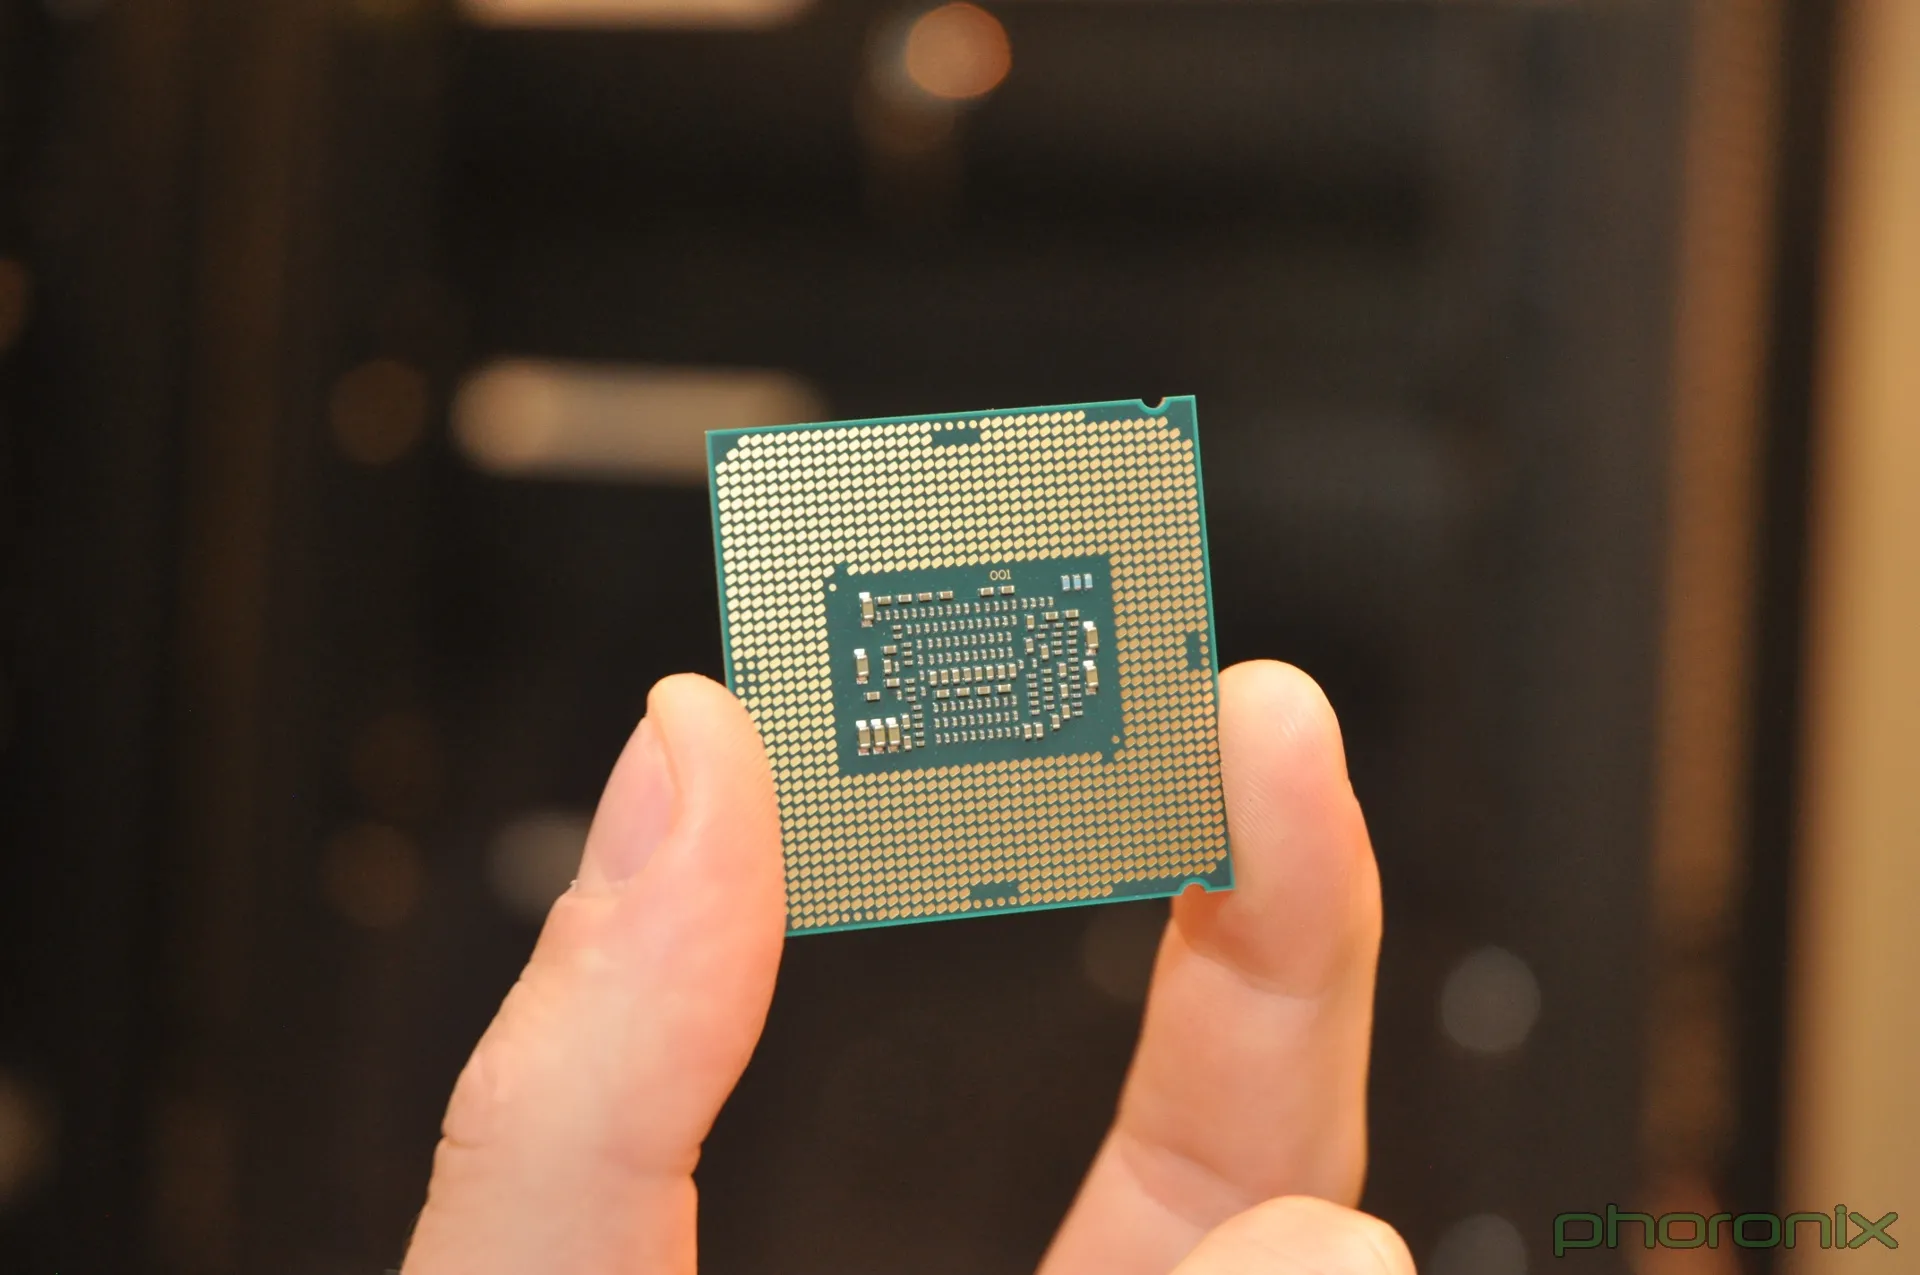  Intel Core i3-8100 Desktop Processor 4 Cores up to 3.6 GHz  Turbo Unlocked LGA1151 300 Series 95W : Electronics